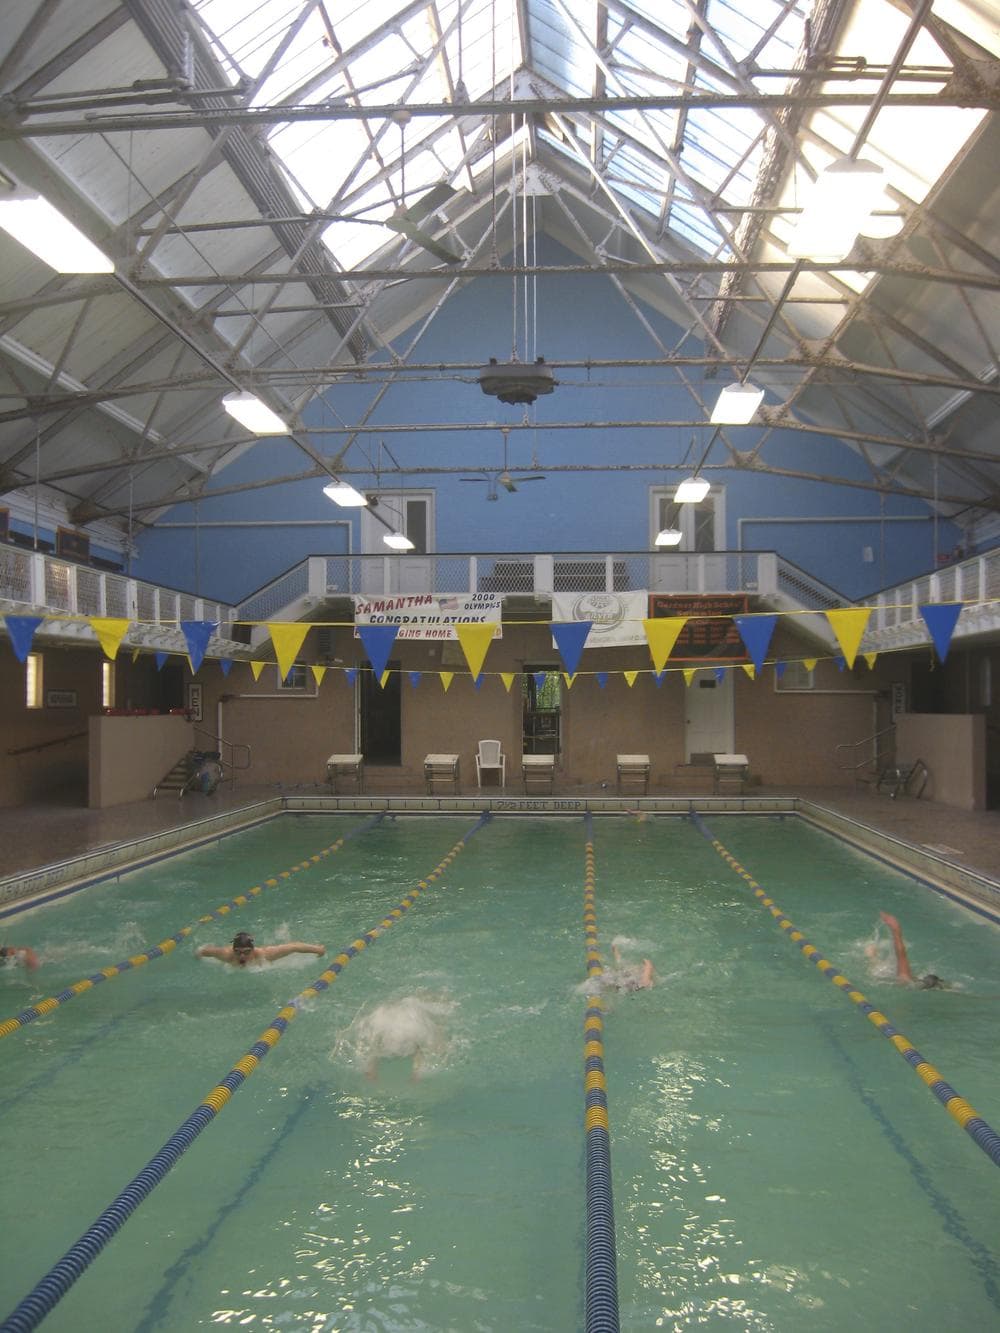 The Greenwood Memorial Swim Club is badly in need of repairs, but Gardner is unable to afford them. (David Boeri/WBUR)